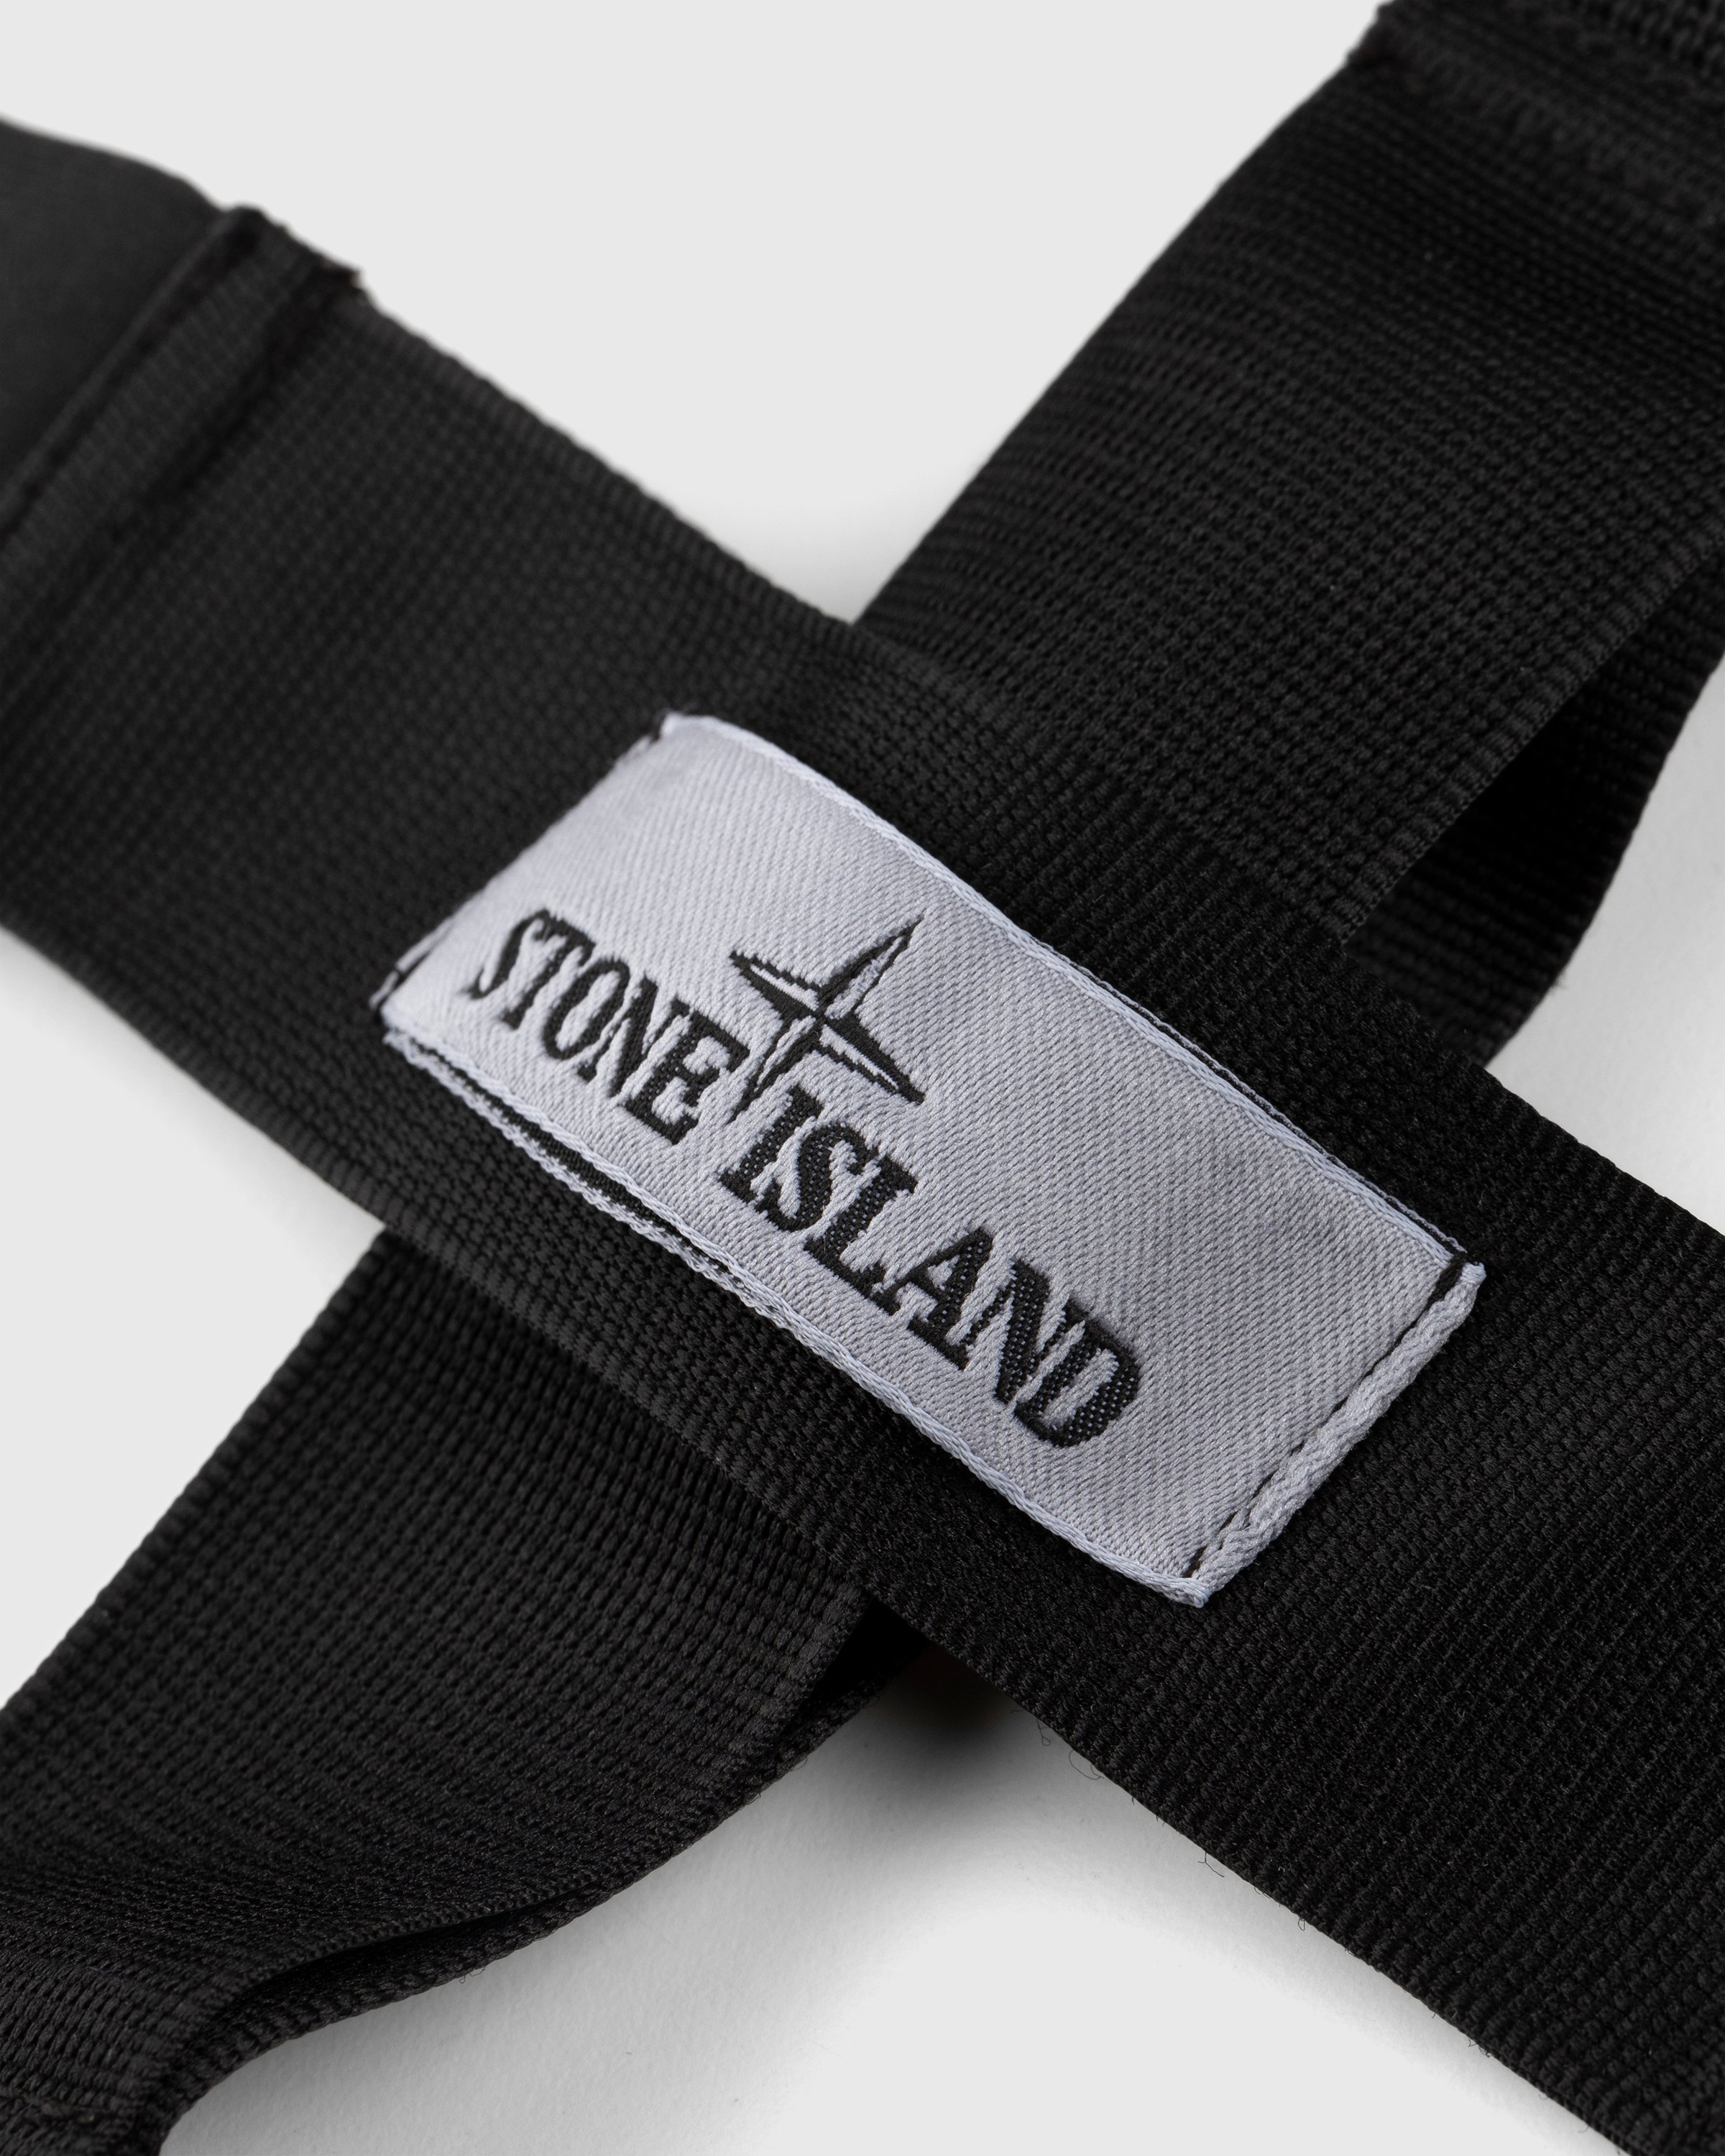 Stone Island - 96070 Cotton Suspenders Black - Accessories - Black - Image 4